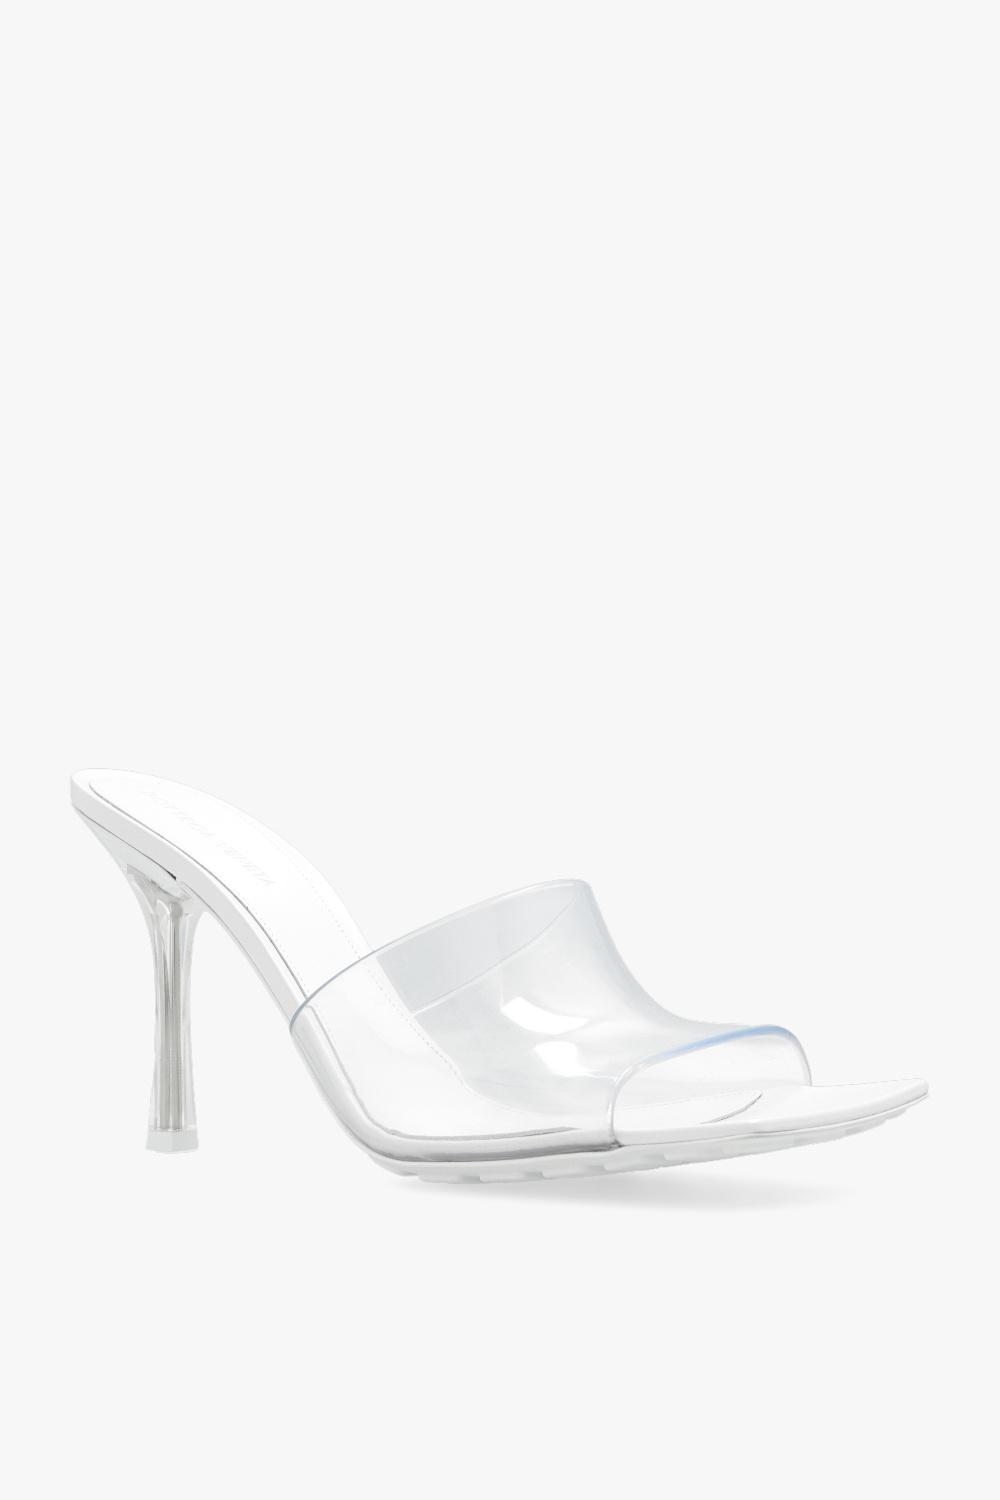 Bottega Veneta Rubber Stretch Mule in White Womens Shoes Heels Mule shoes 